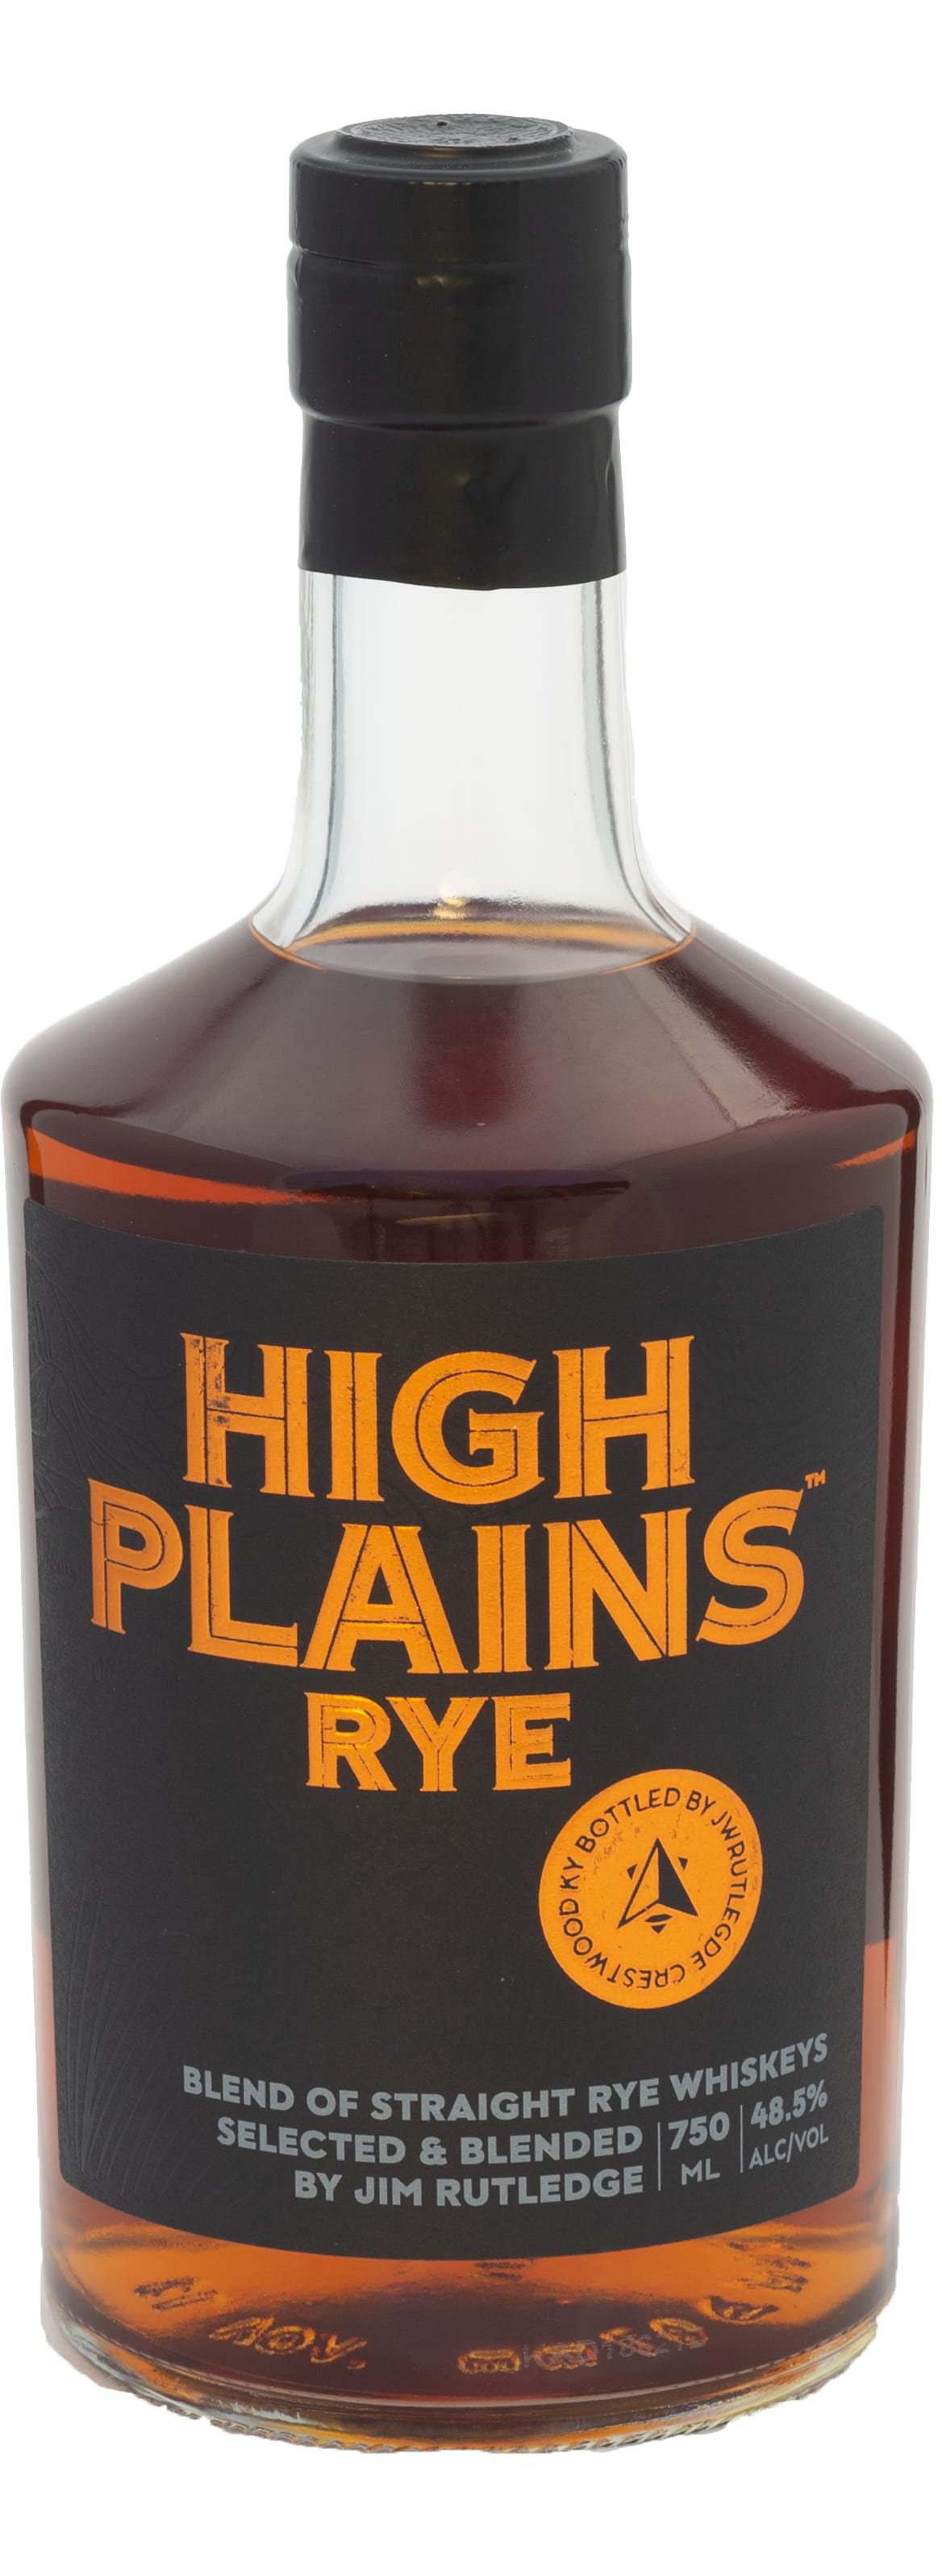 High Plains Rye by Jim Rutledge